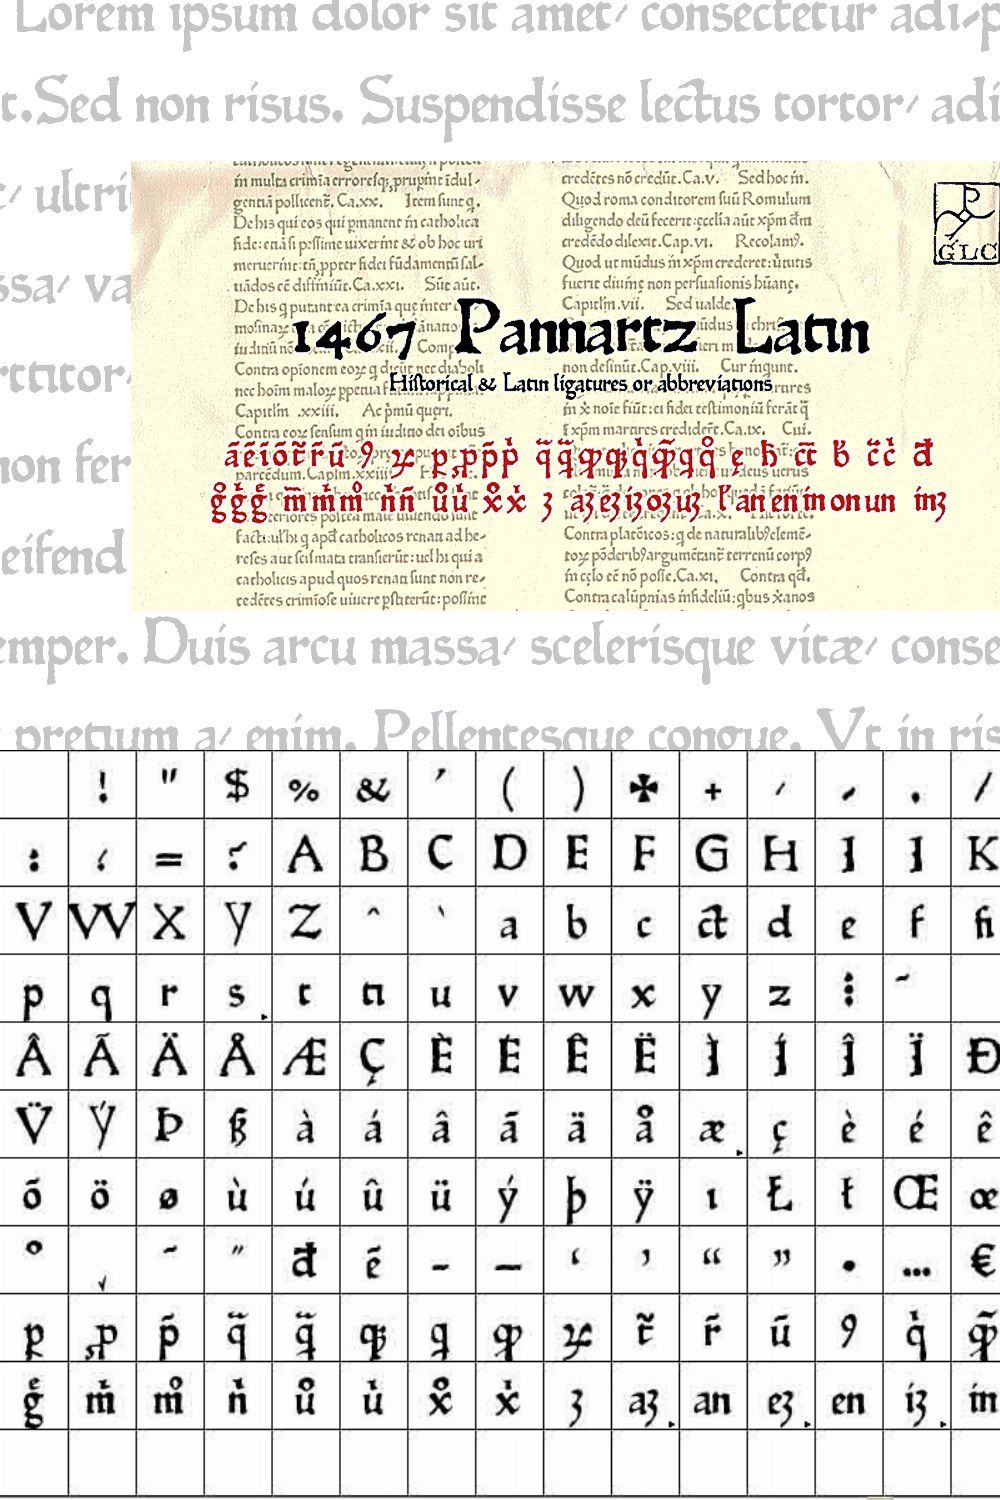 1467 Pannartz Latin OTF pinterest preview image.